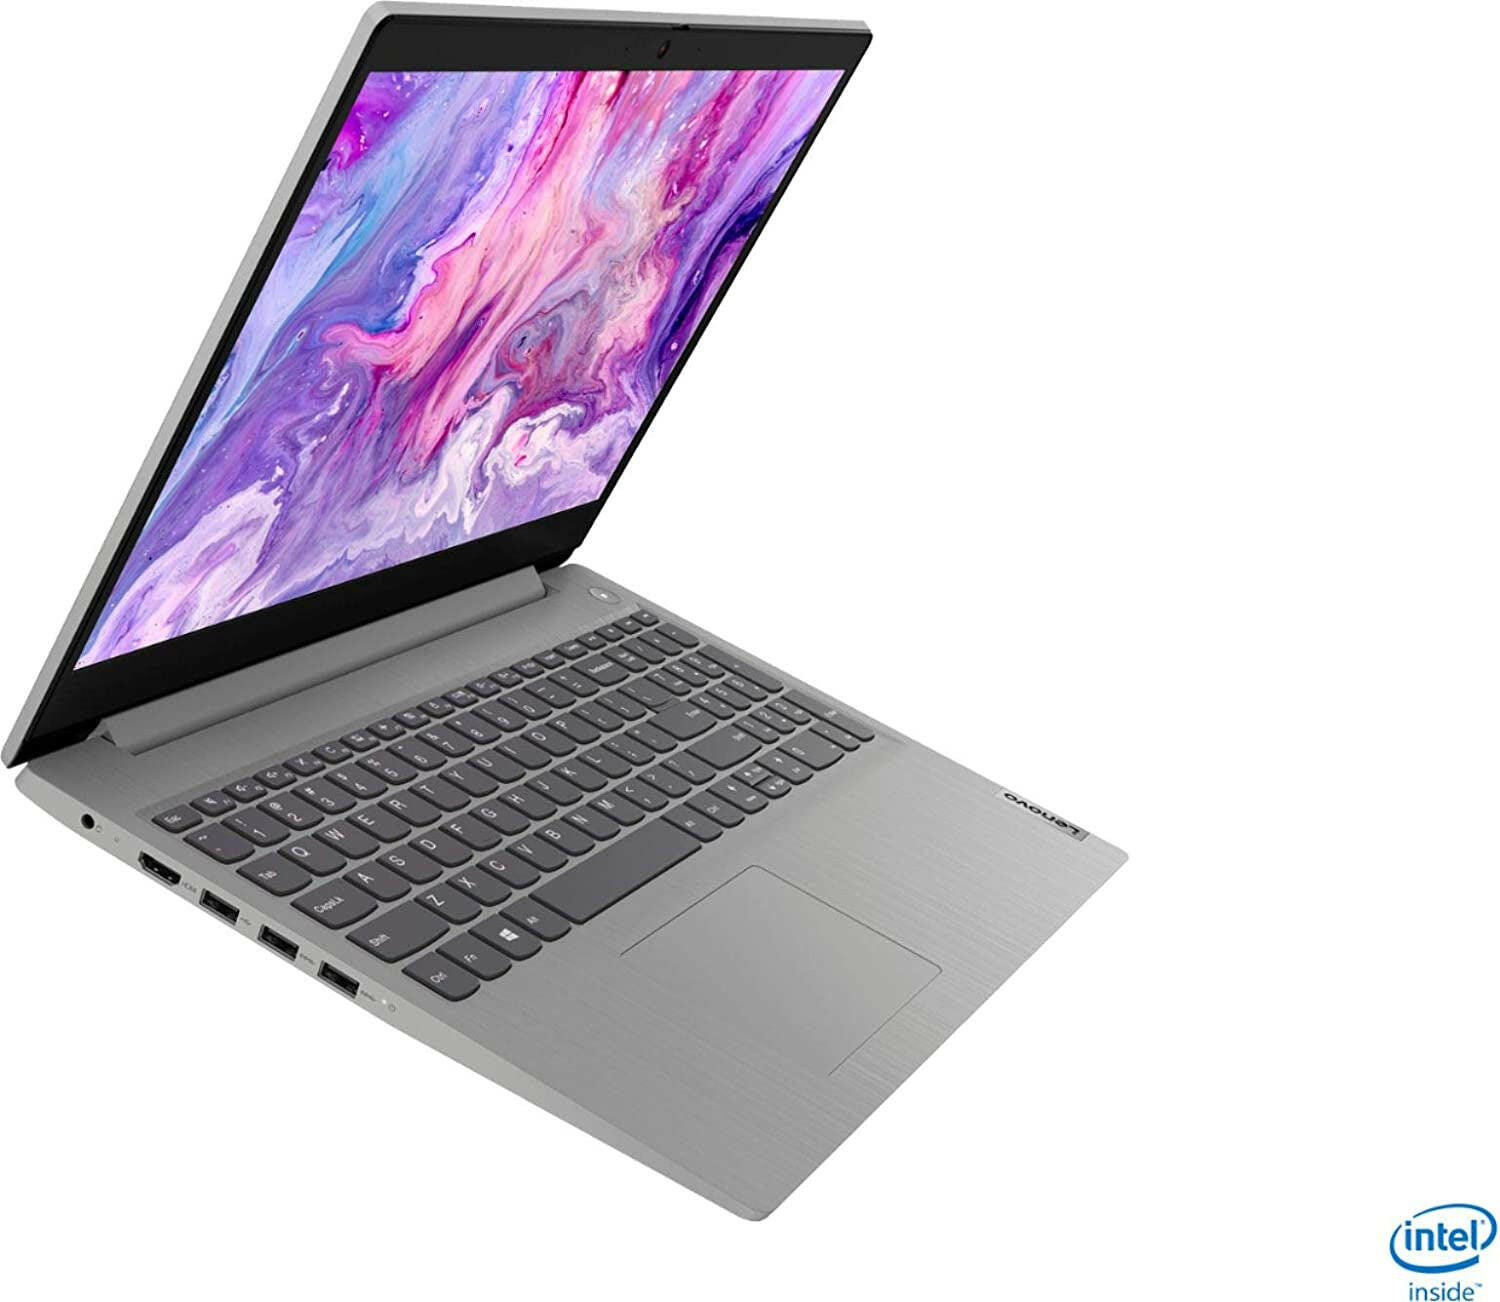 Ideapad 3 Touchscreen Laptop, 15.6" HD Display, Intel Quad-Core I5-1035G1, 8GB RAM, 256GB SSD, Wifi, HDMI, Win 10 with Galliumpi Mousepad